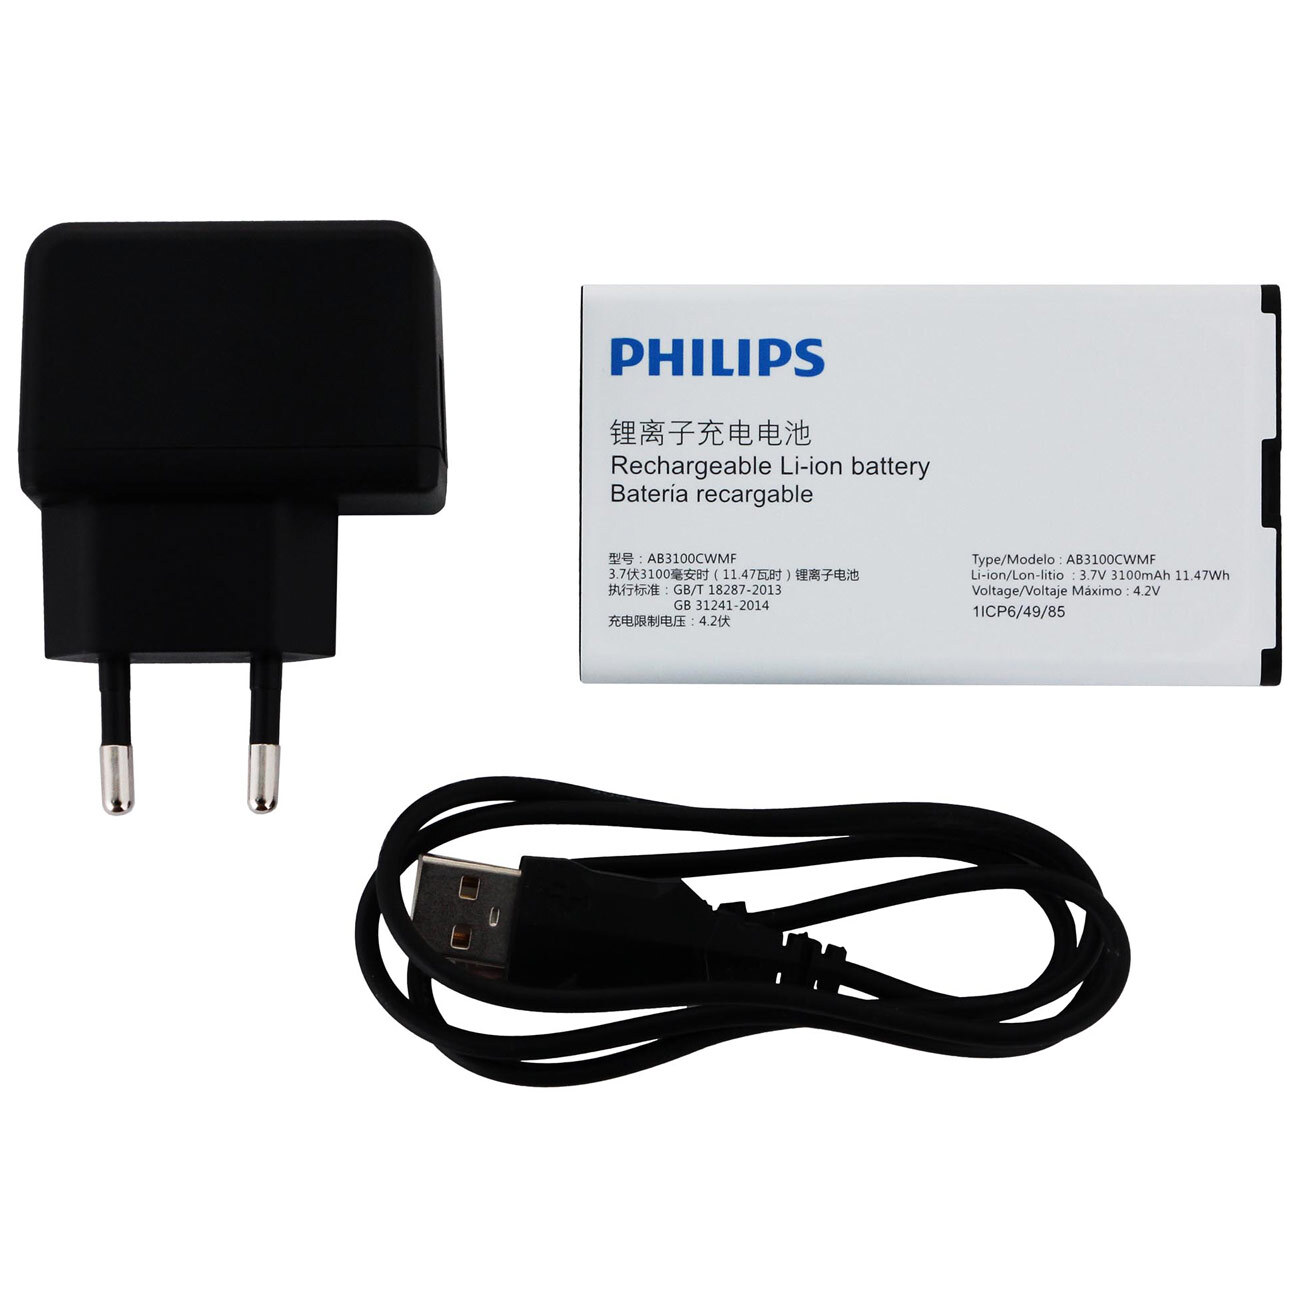 Philips e580 купить. Филипс e580. Мобильный телефон Philips Xenium e580. Мобильный телефон Philips Xenium e111 черный. Philips e580 Black карта памяти.